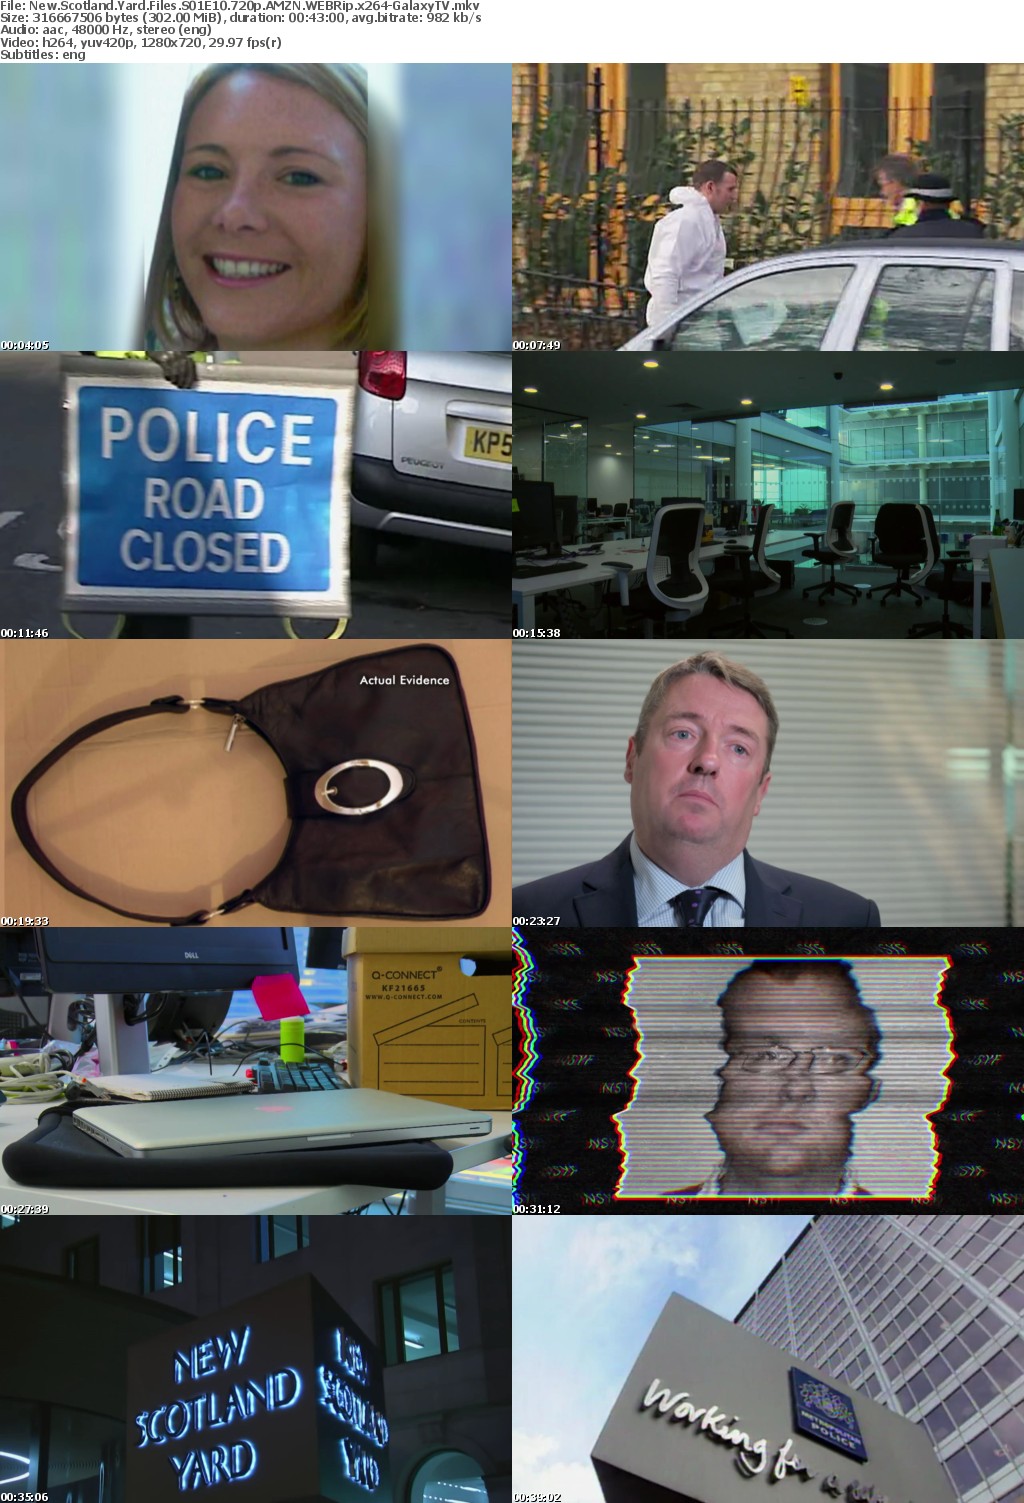 New Scotland Yard Files S01 COMPLETE 720p AMZN WEBRip x264-GalaxyTV